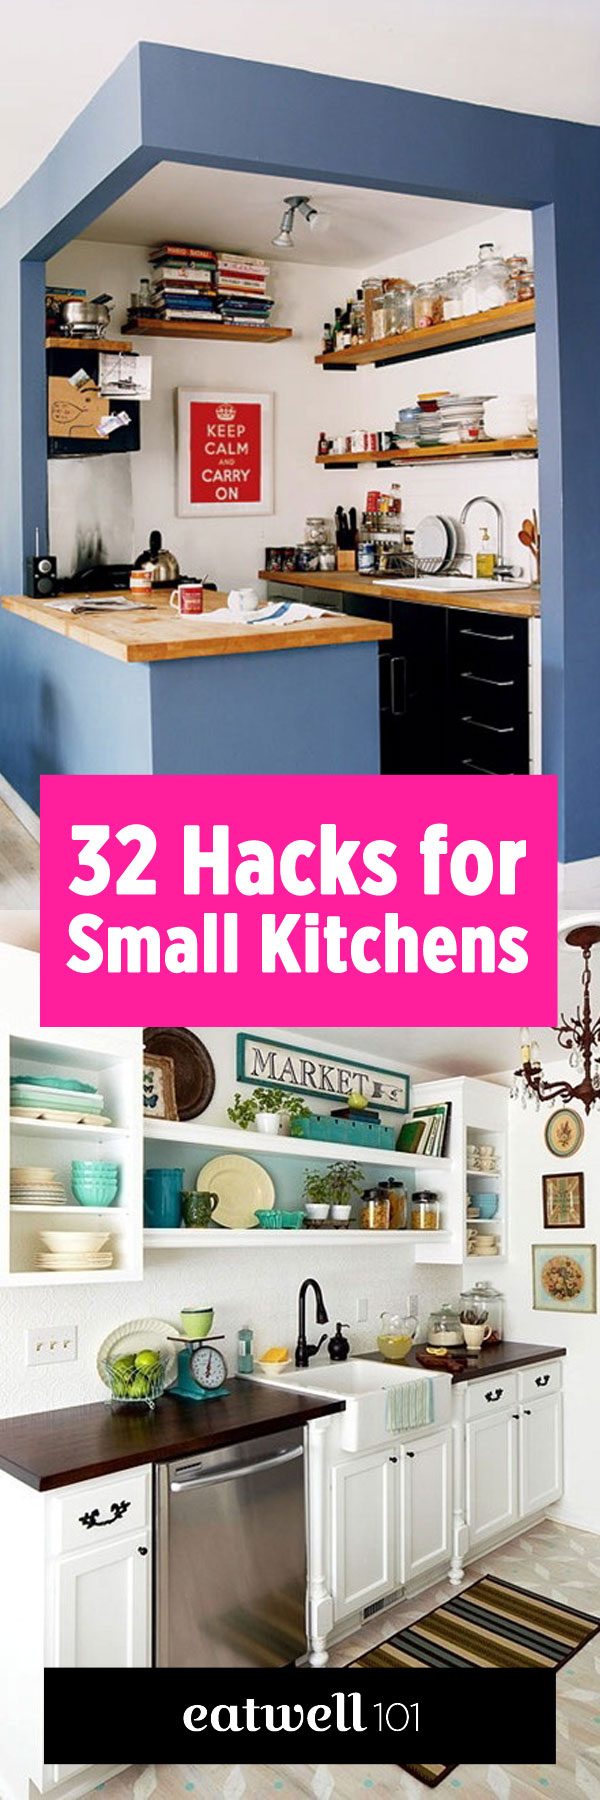 Small Kitchen Tips 